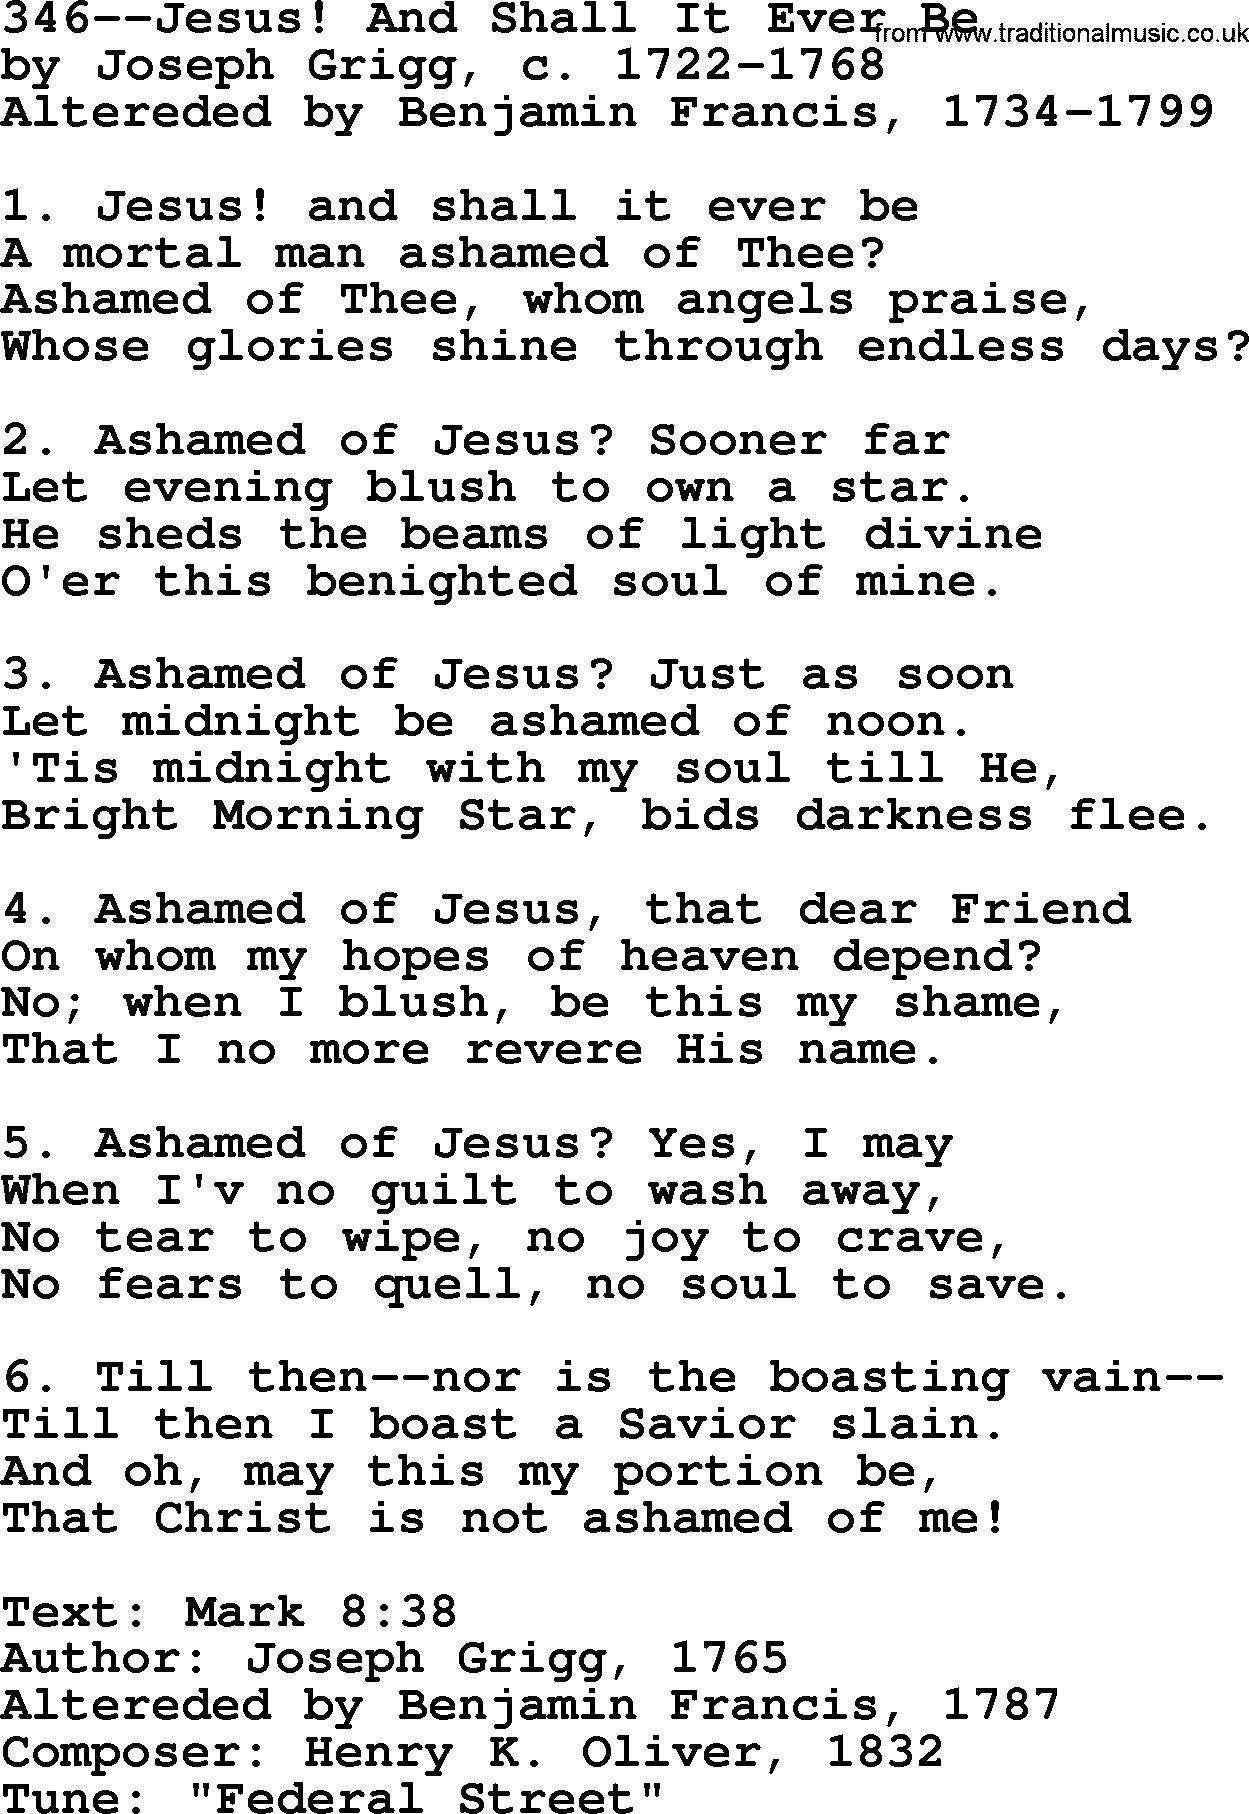 Lutheran Hymn: 346--Jesus! And Shall It Ever Be.txt lyrics with PDF